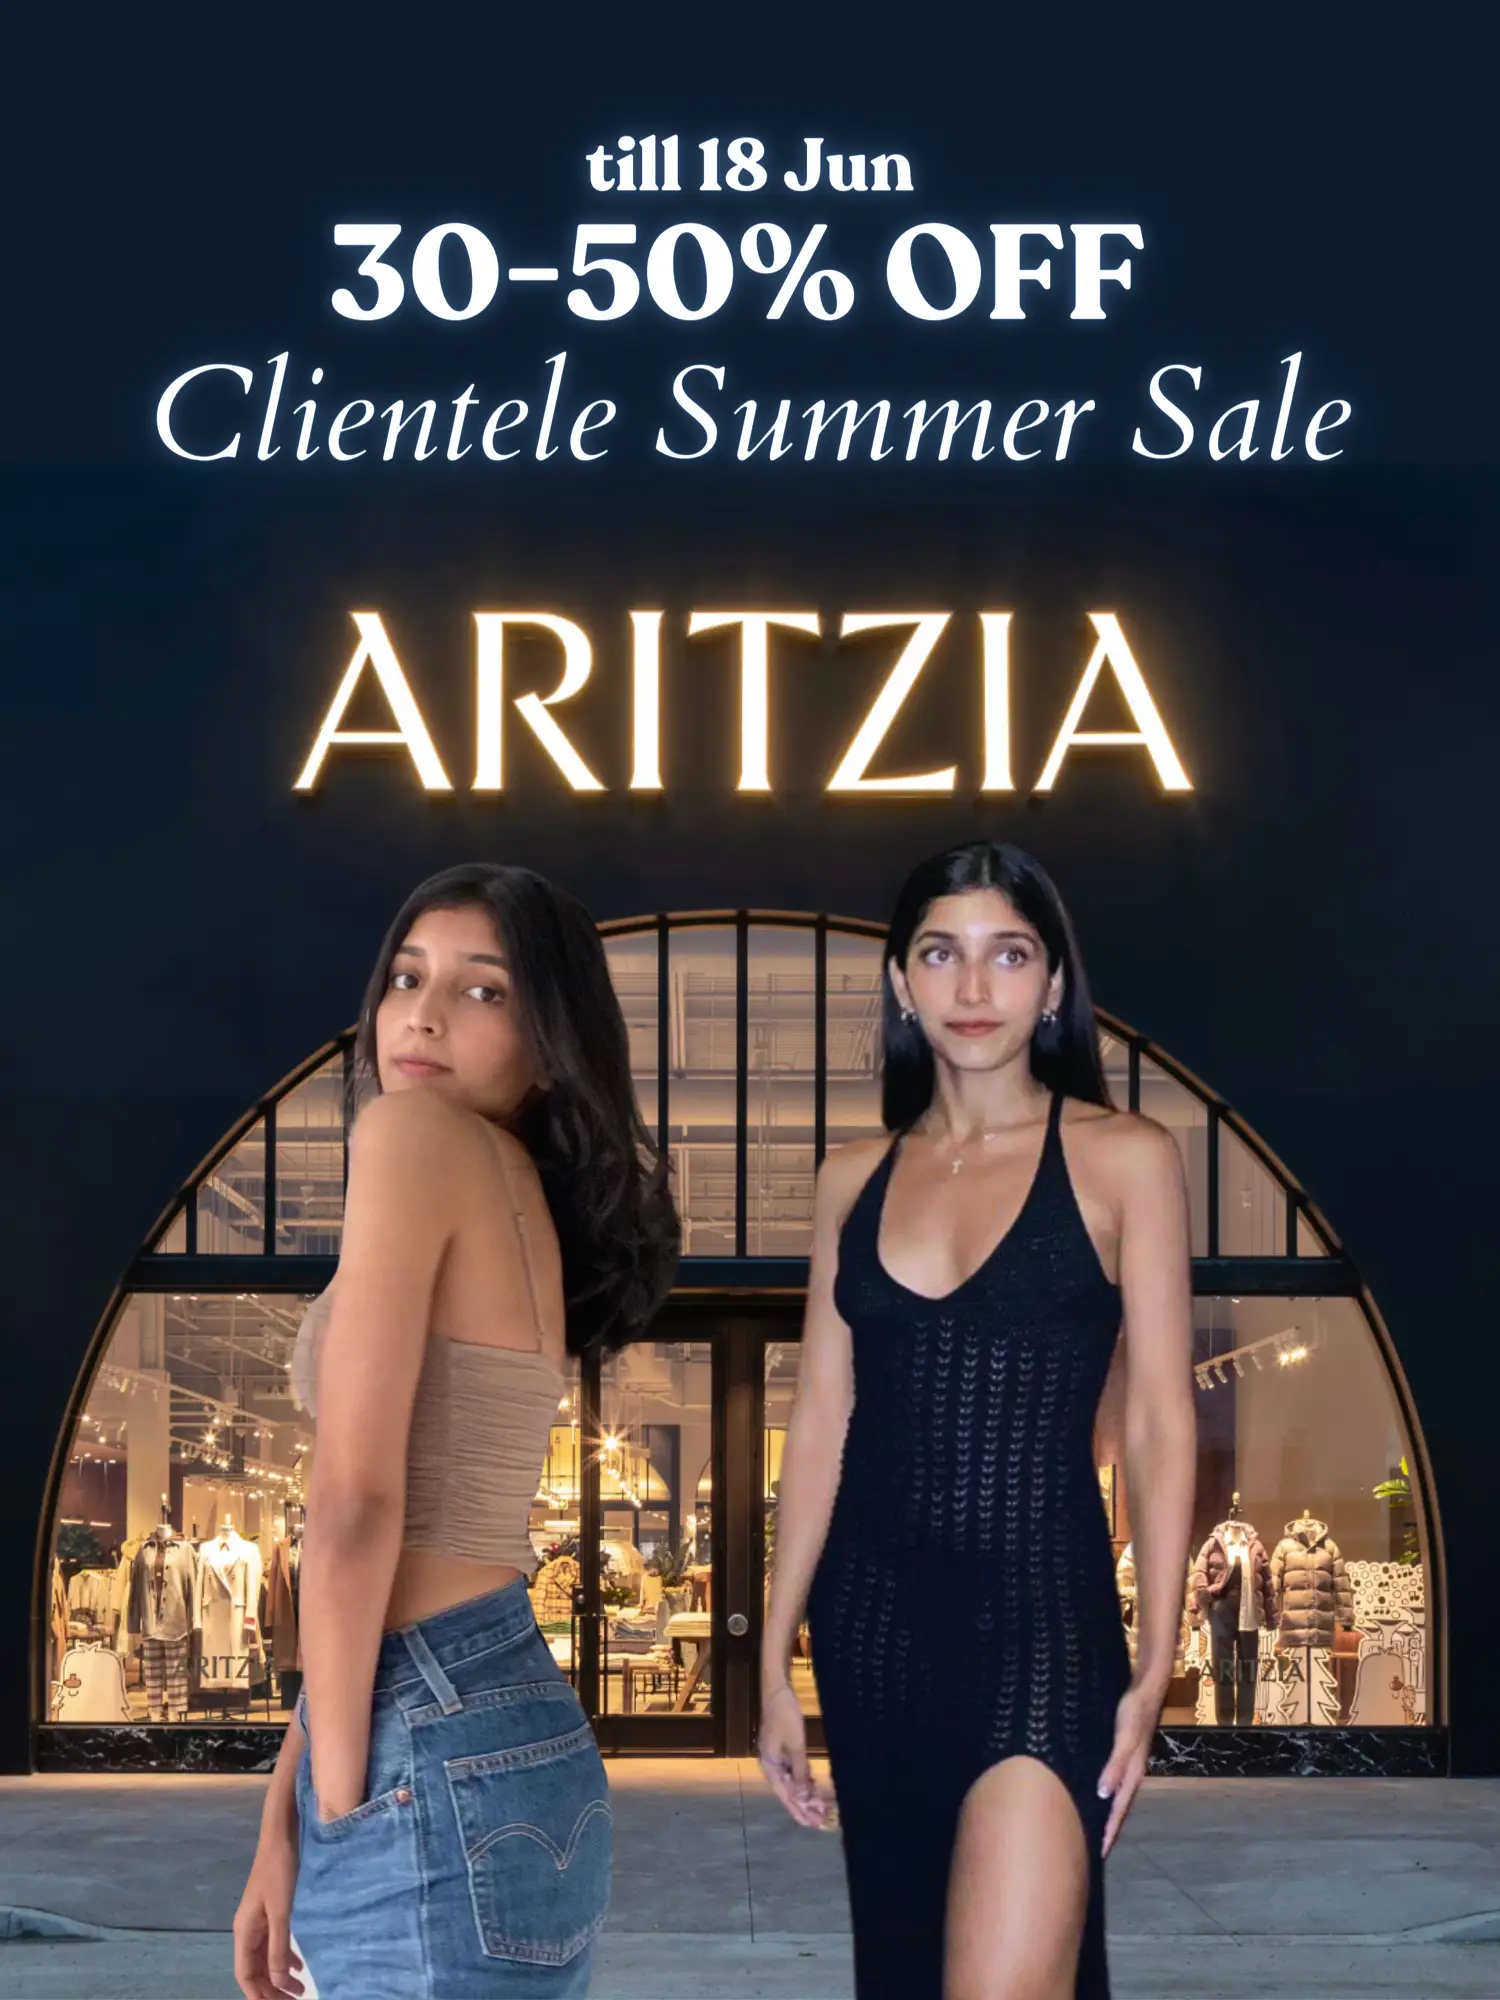 Aritzia White Bodysuit - $34 (43% Off Retail) - From andrea